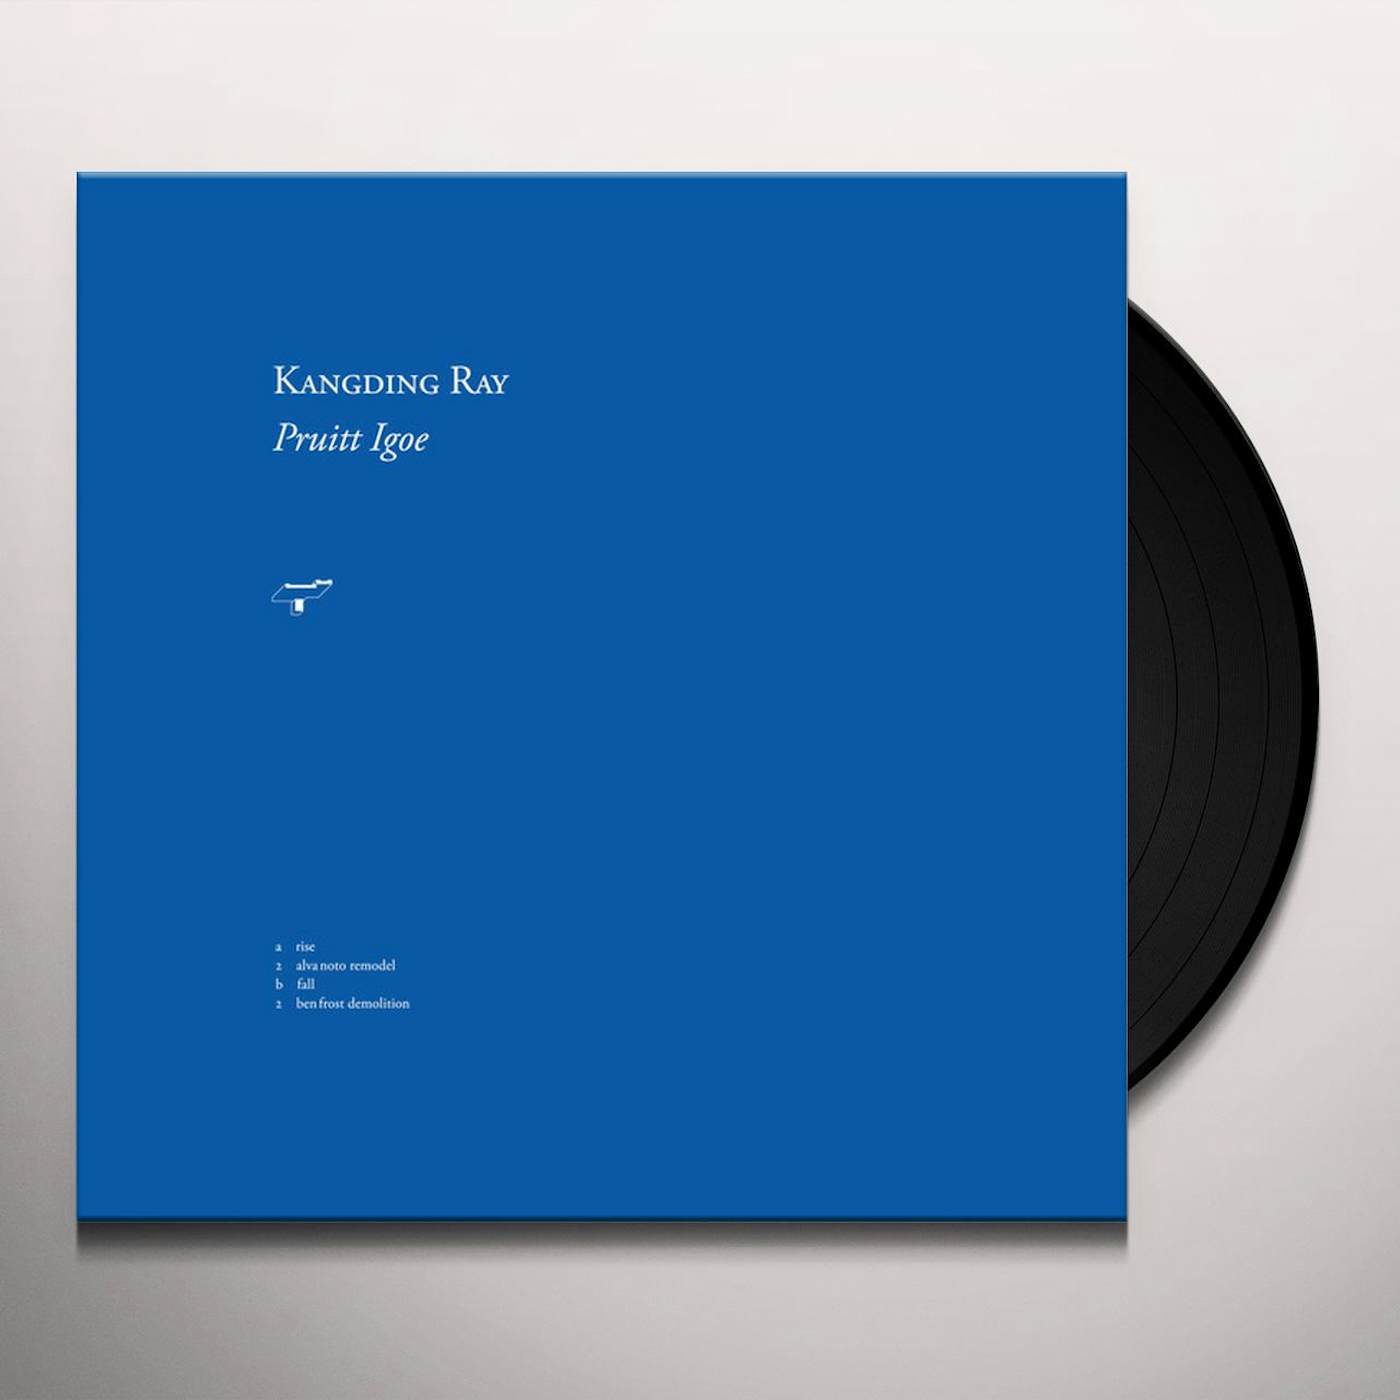 Kangding Ray Pruitt Igoe Vinyl Record